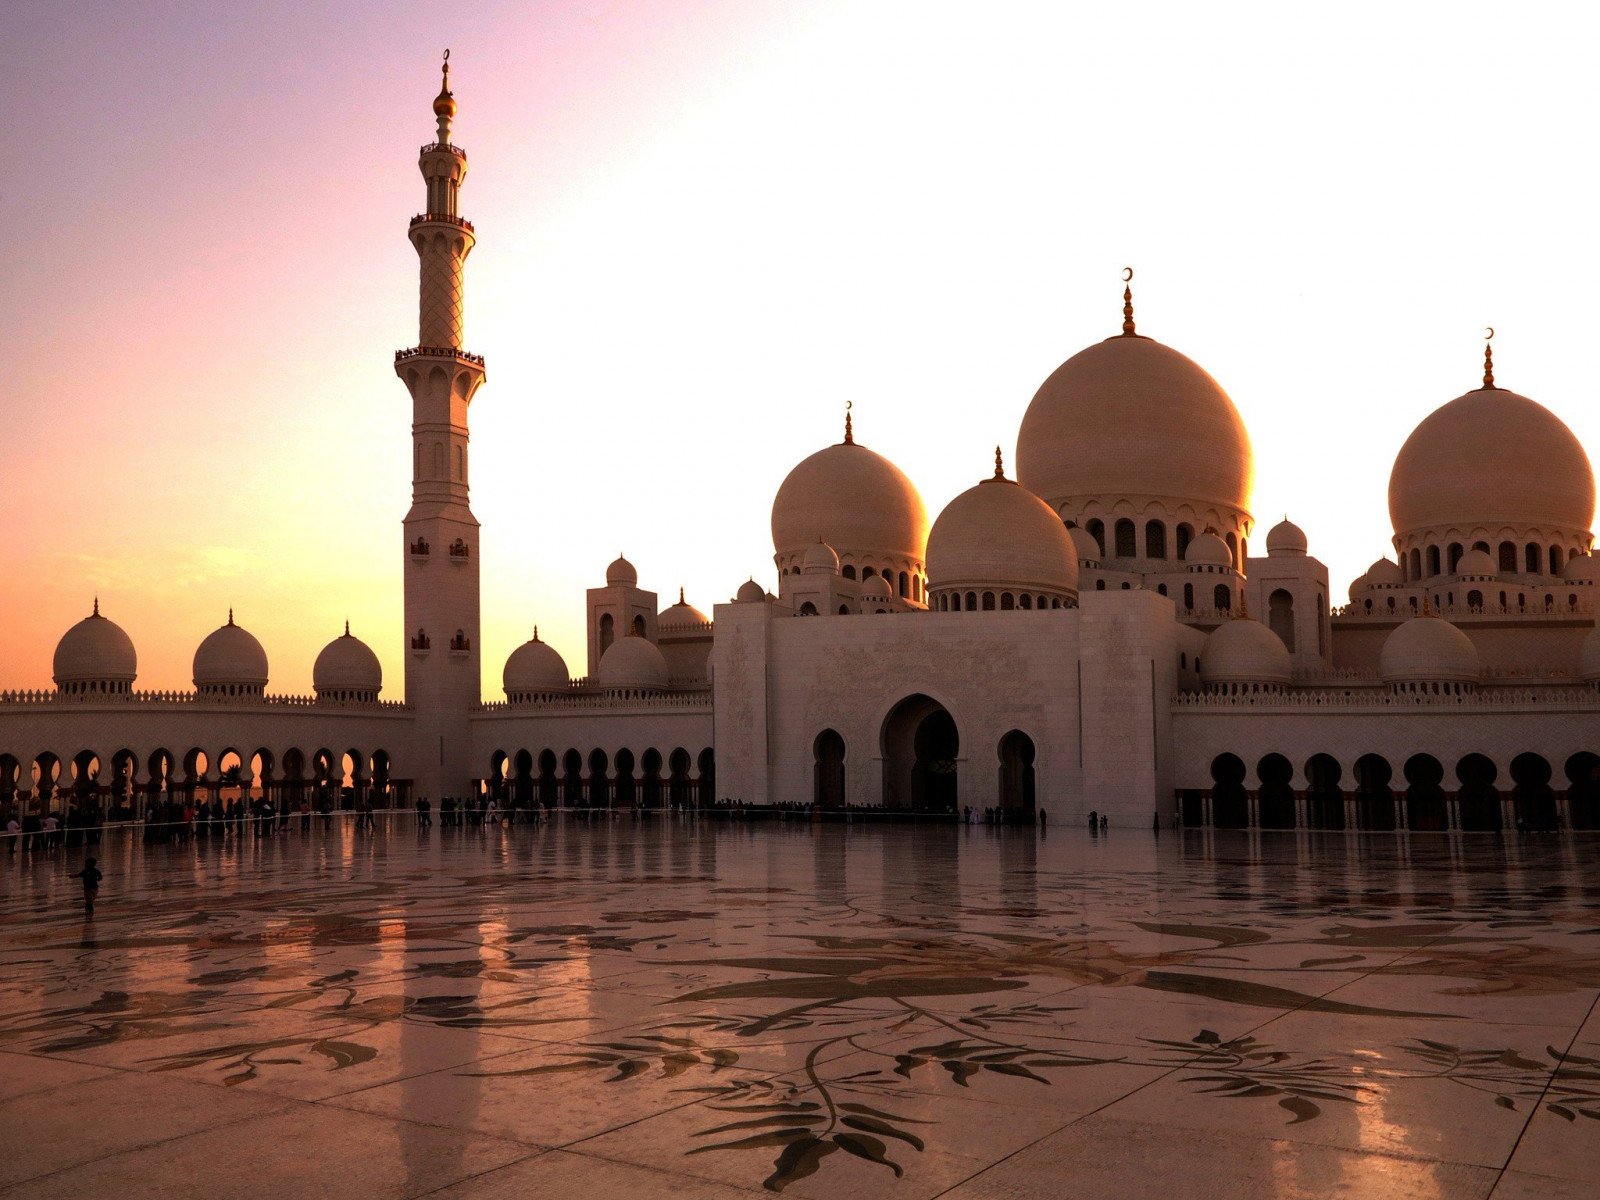 Мусульманское п. Мечеть шейха Зайда Абу-Даби вечером. Тадж-Аль-Масджид.Индия. Архитектура Ислама мечеть в Абу Даби.